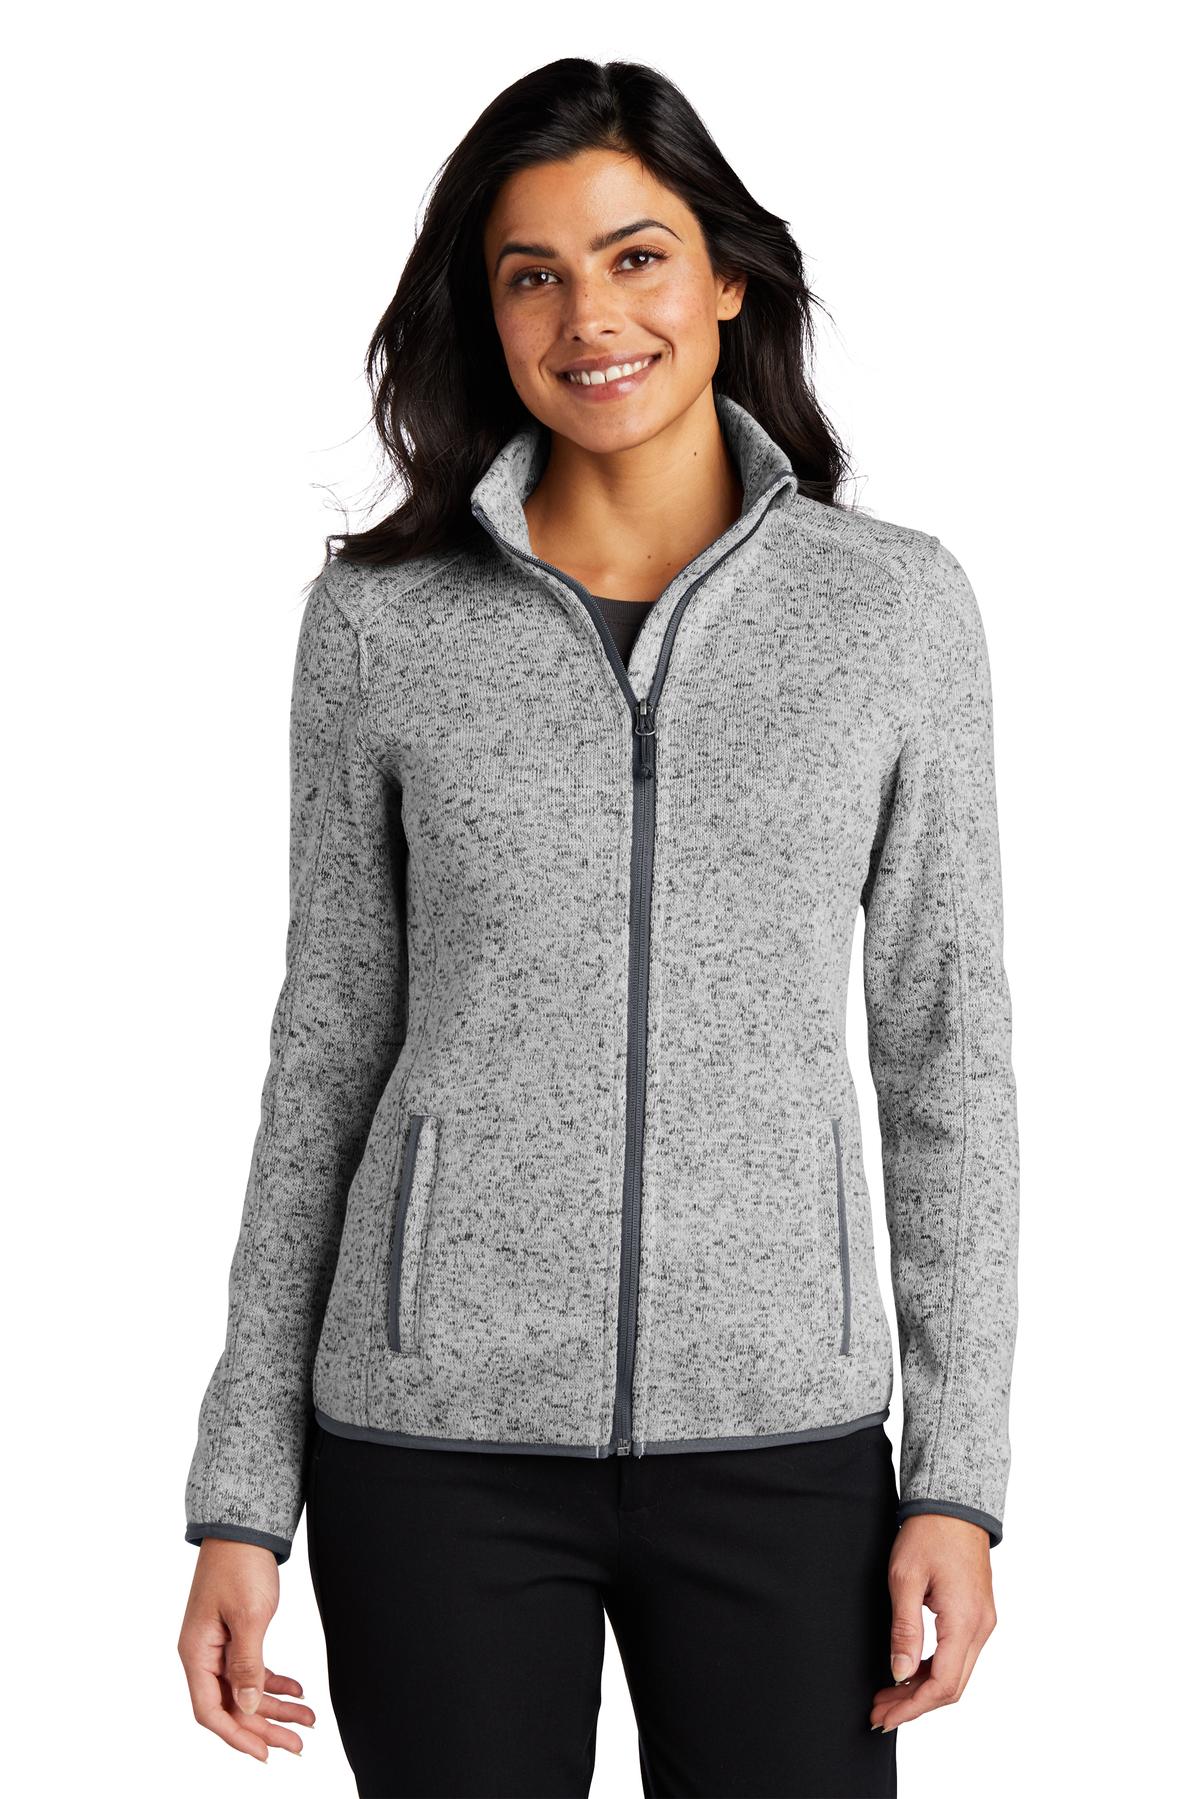 Ladies Port Authority Sweater Fleece Jacket - Rock Canyon Football